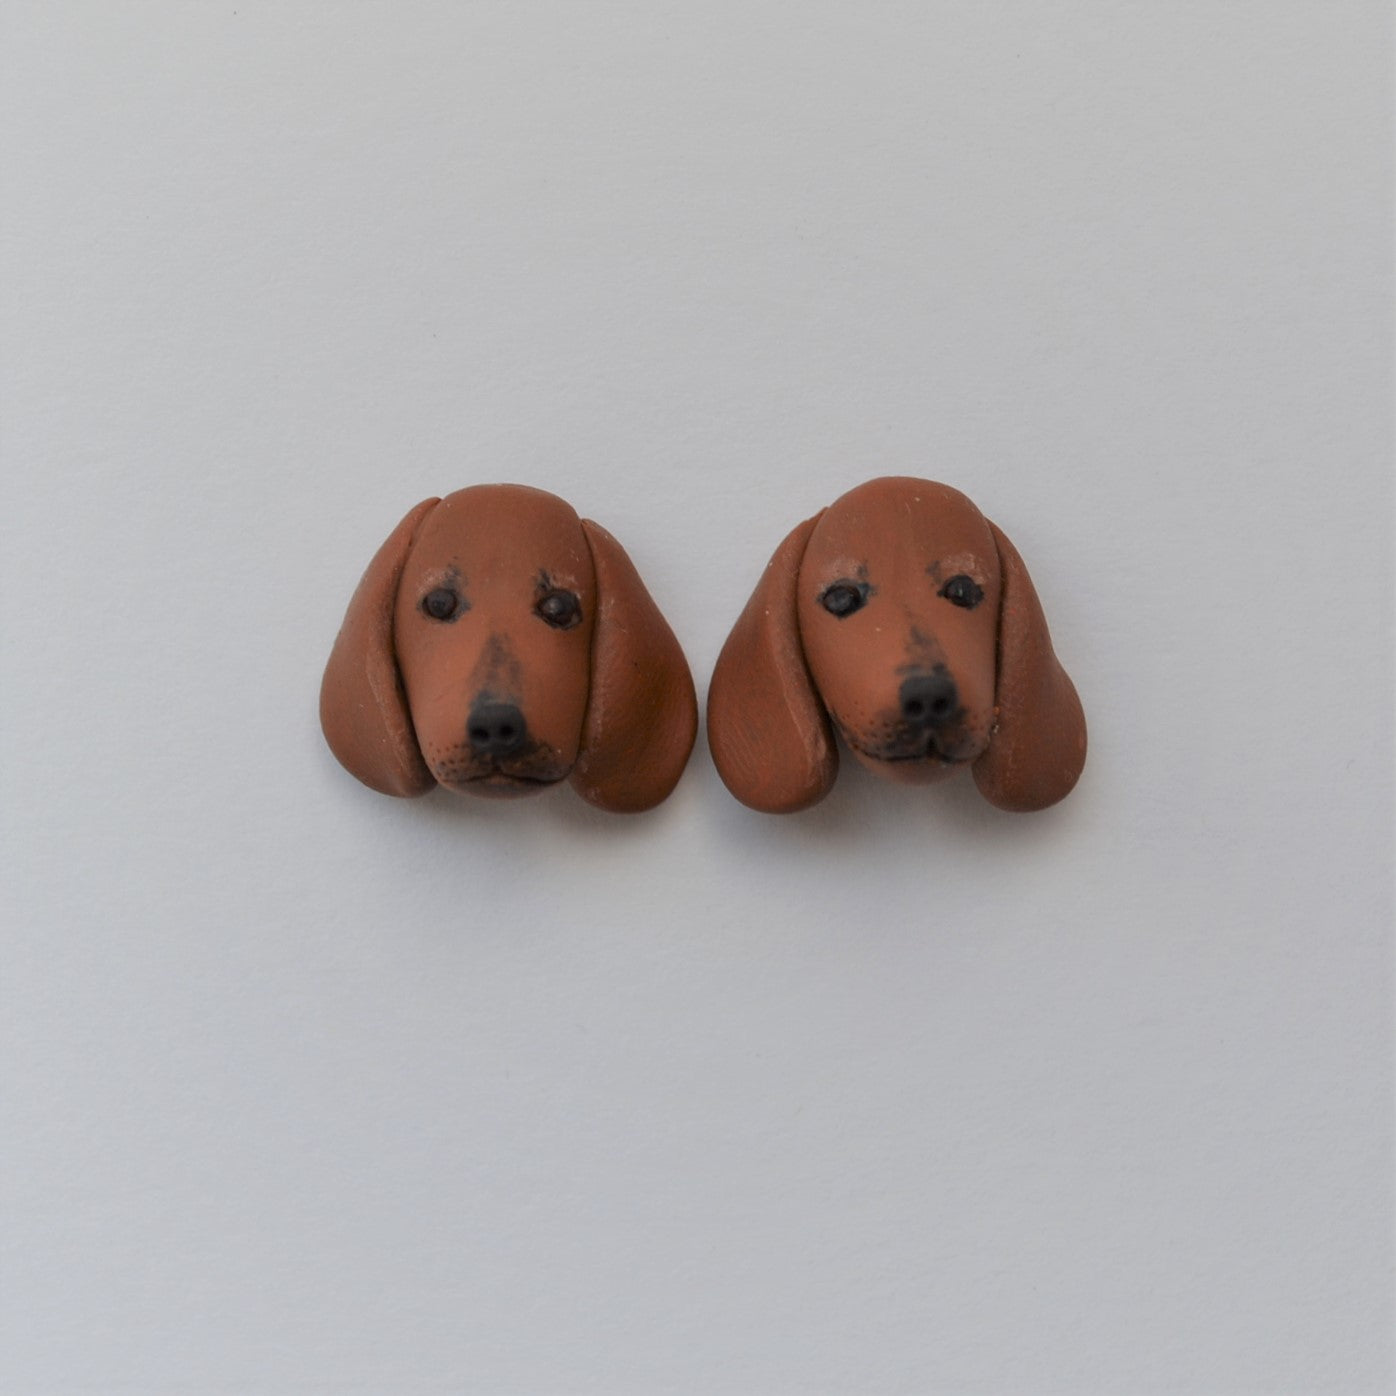 Handmade polymer clay Dachshund stud earrings shown on white background